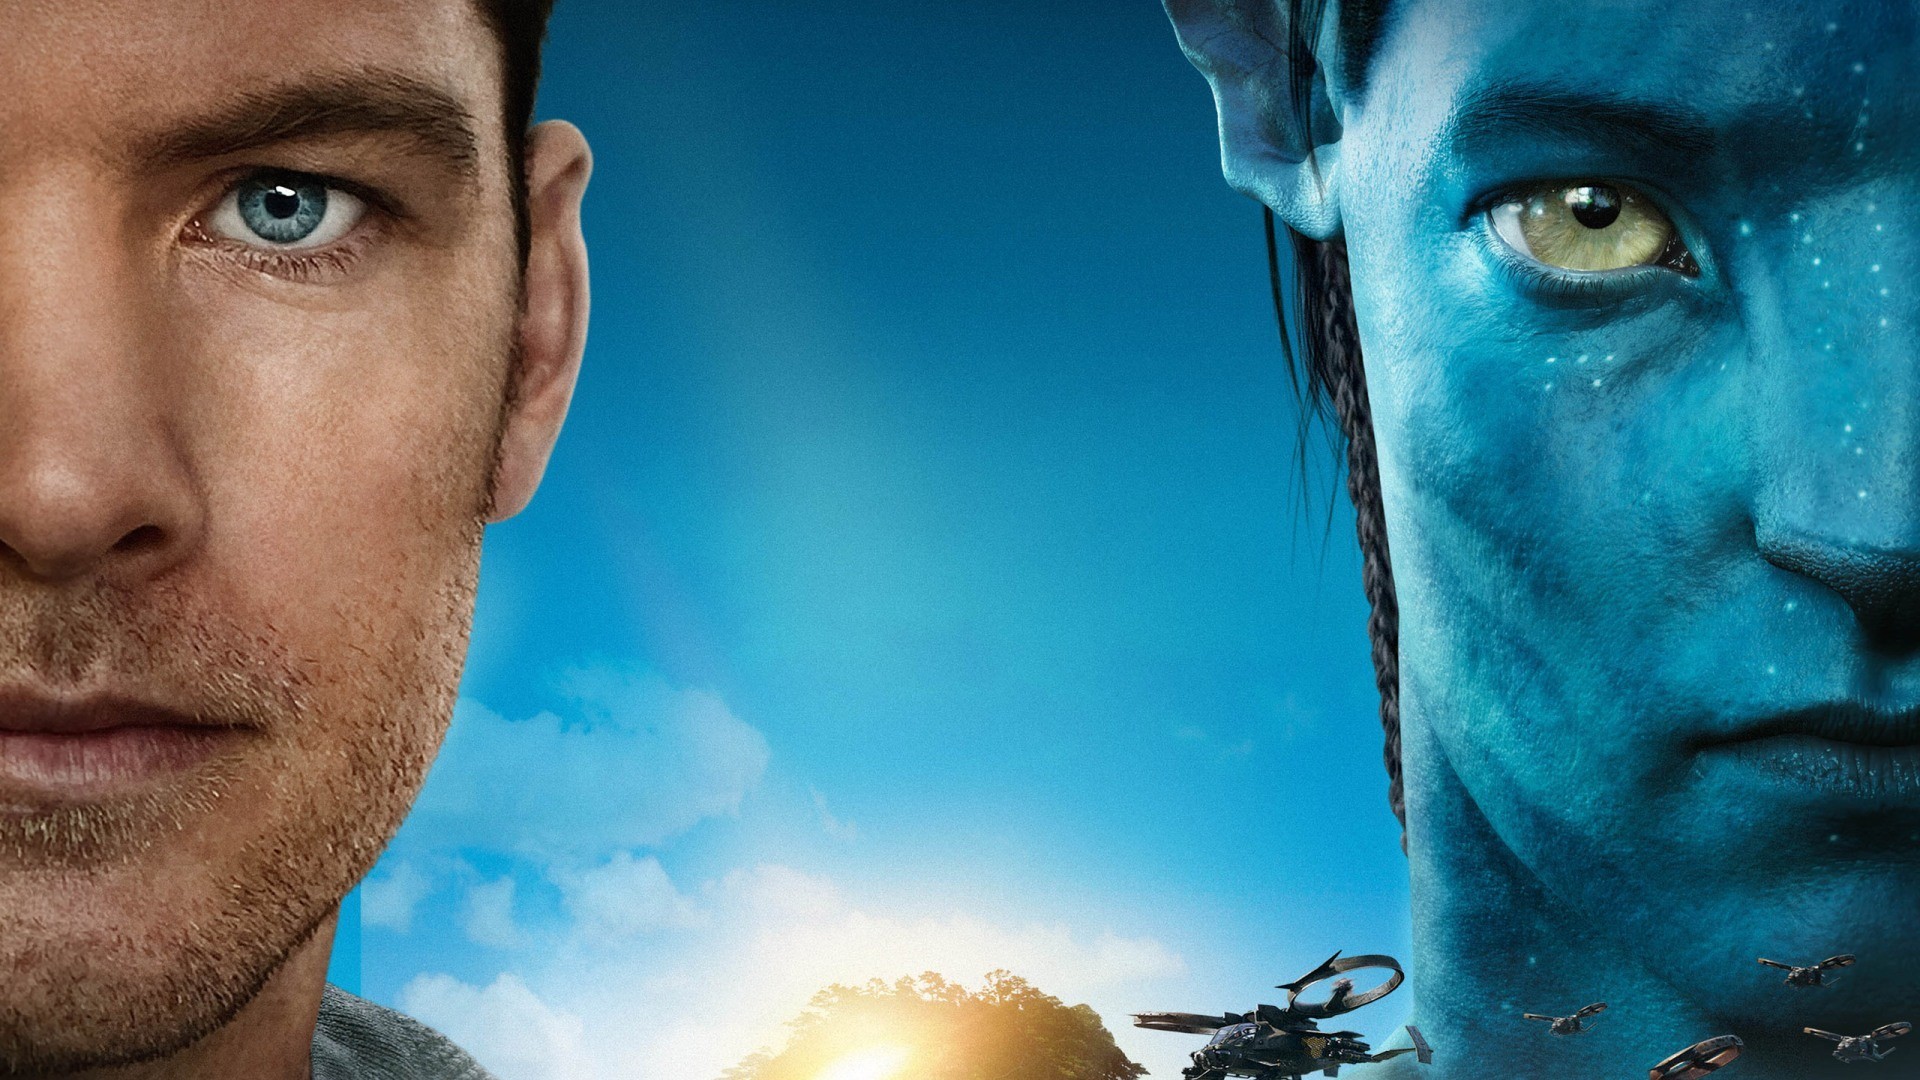 General 1920x1080 Avatar Jake Sully men Na'vi movies science fiction Sam Worthington actor face James Cameron Australian